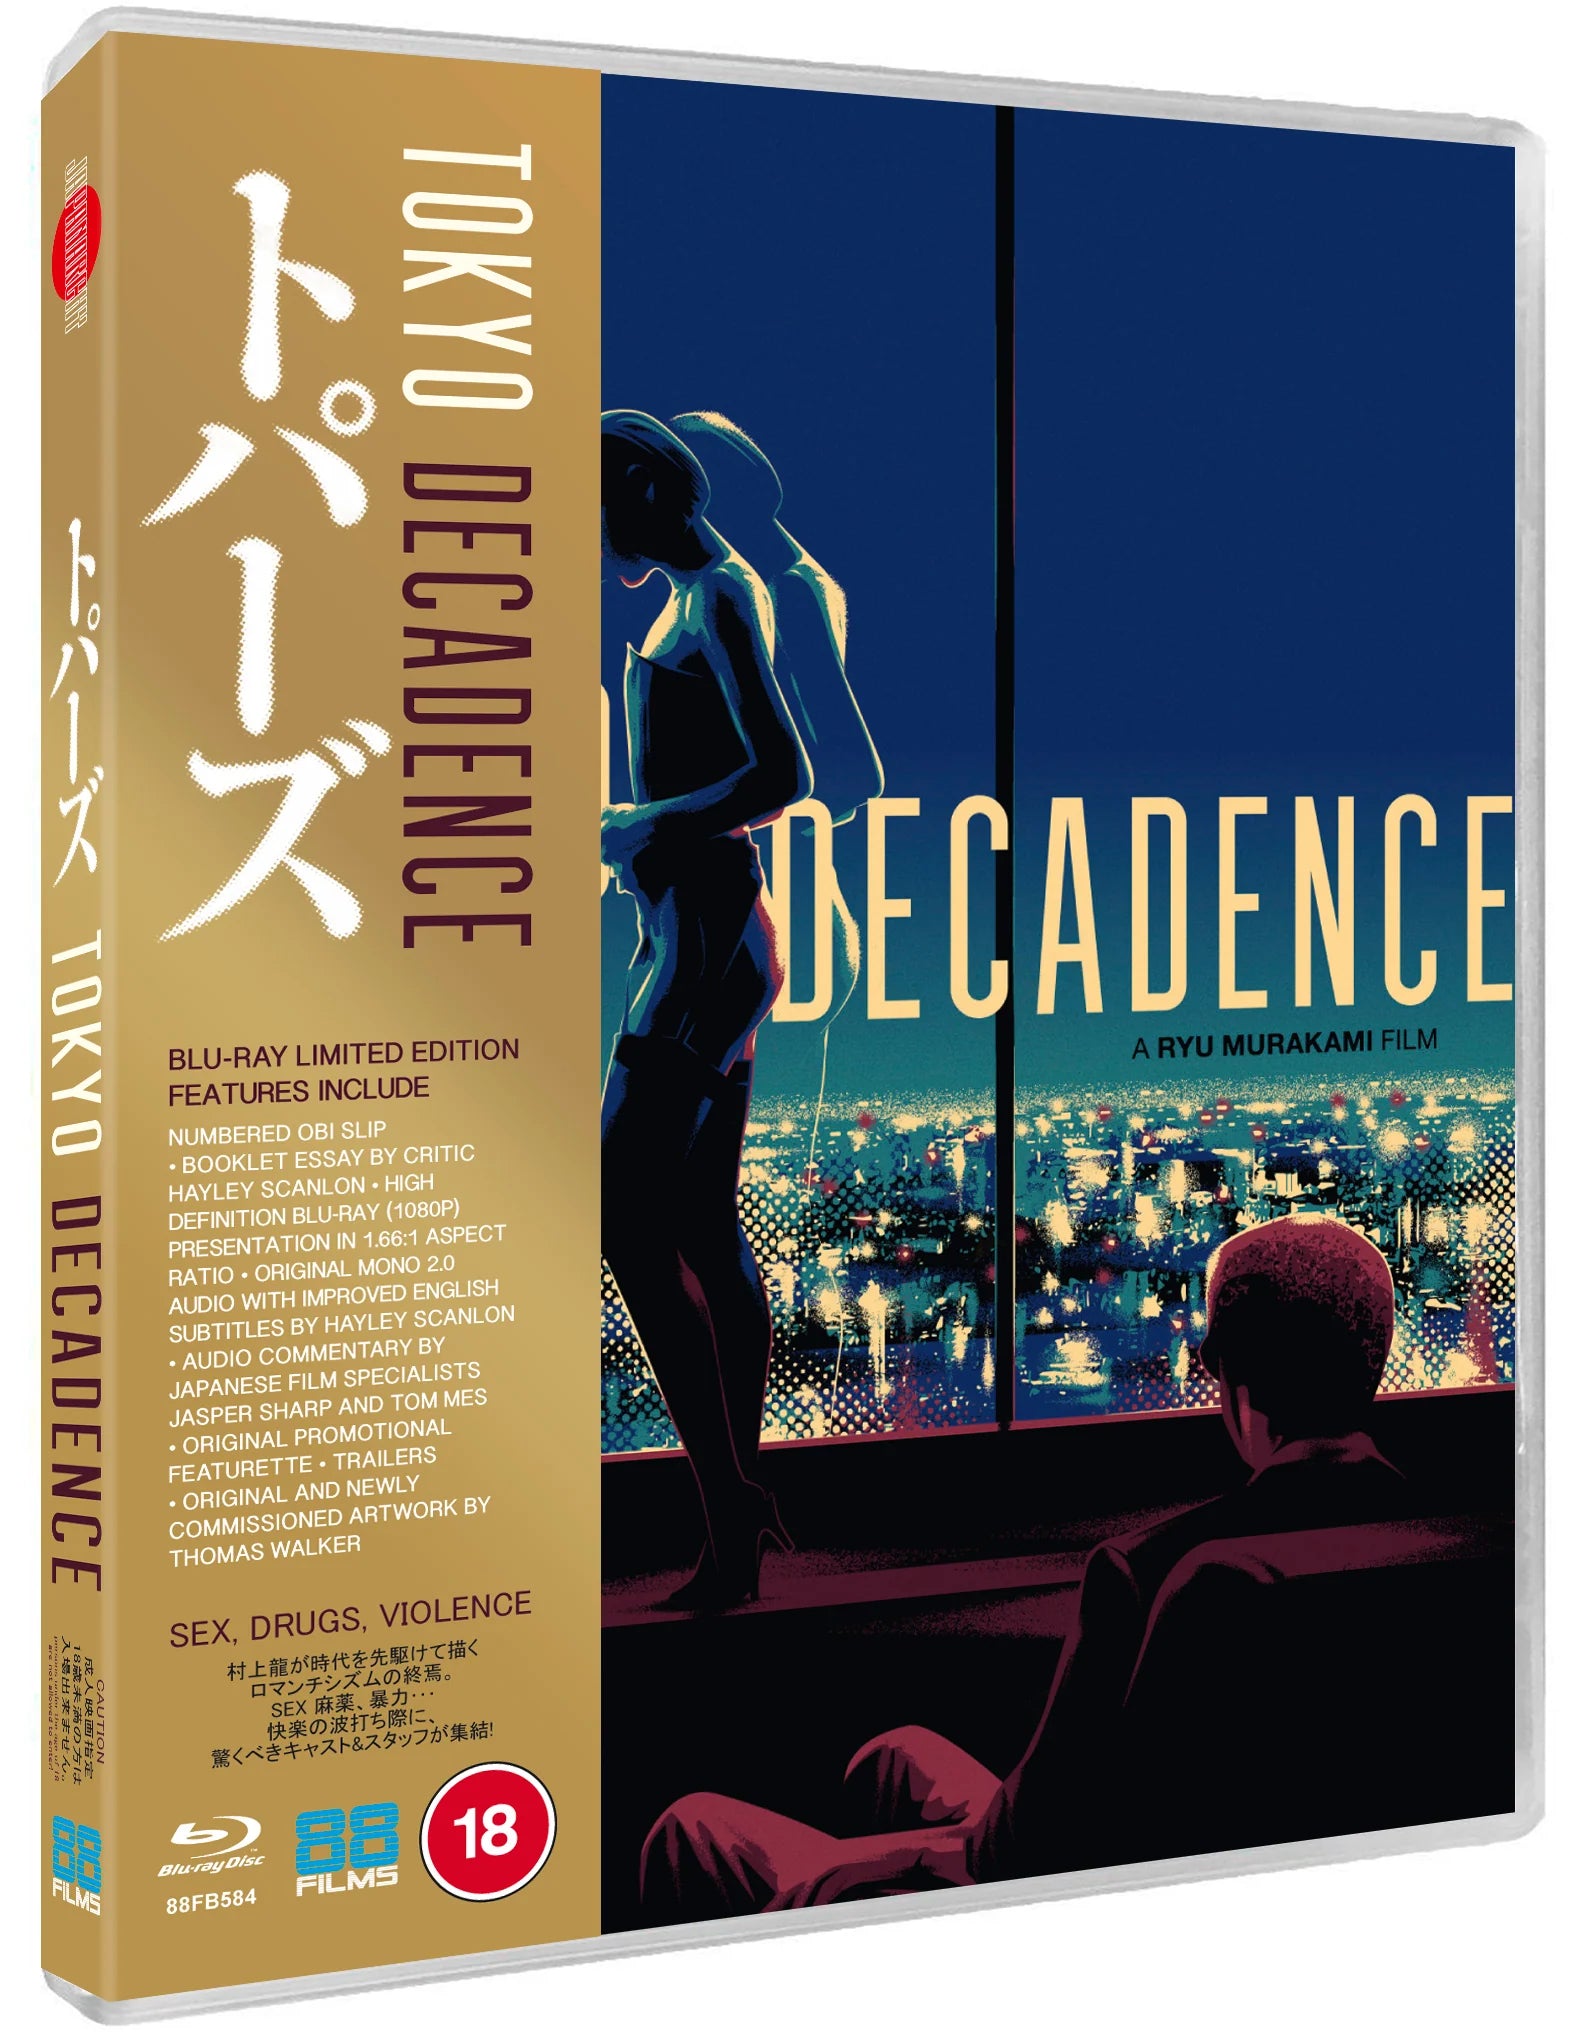 Tokyo Decadence Blu-ray (88 Films/Region B) – The Atomic Movie Store